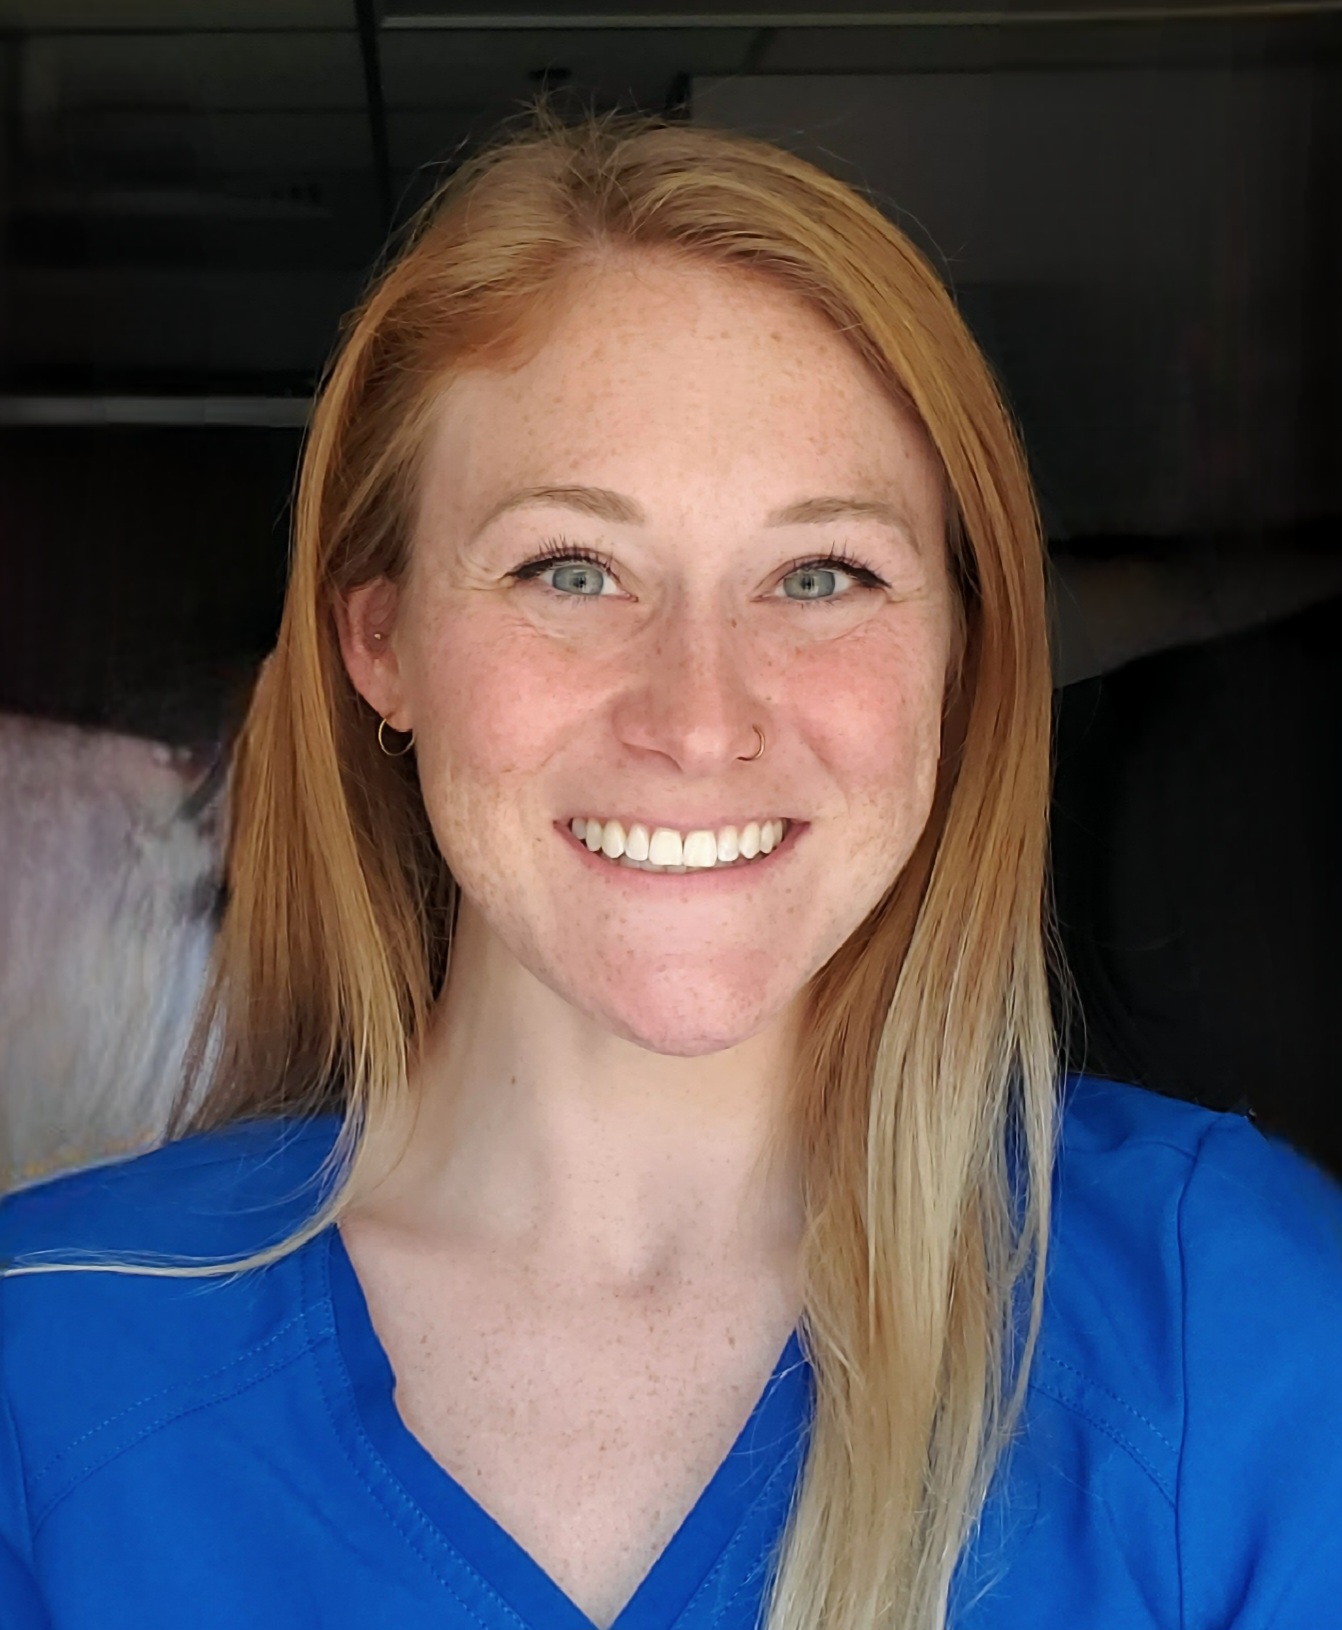 close-up headshot image of senior physical therapist kaitlyn lozano wearing a blue scrub top